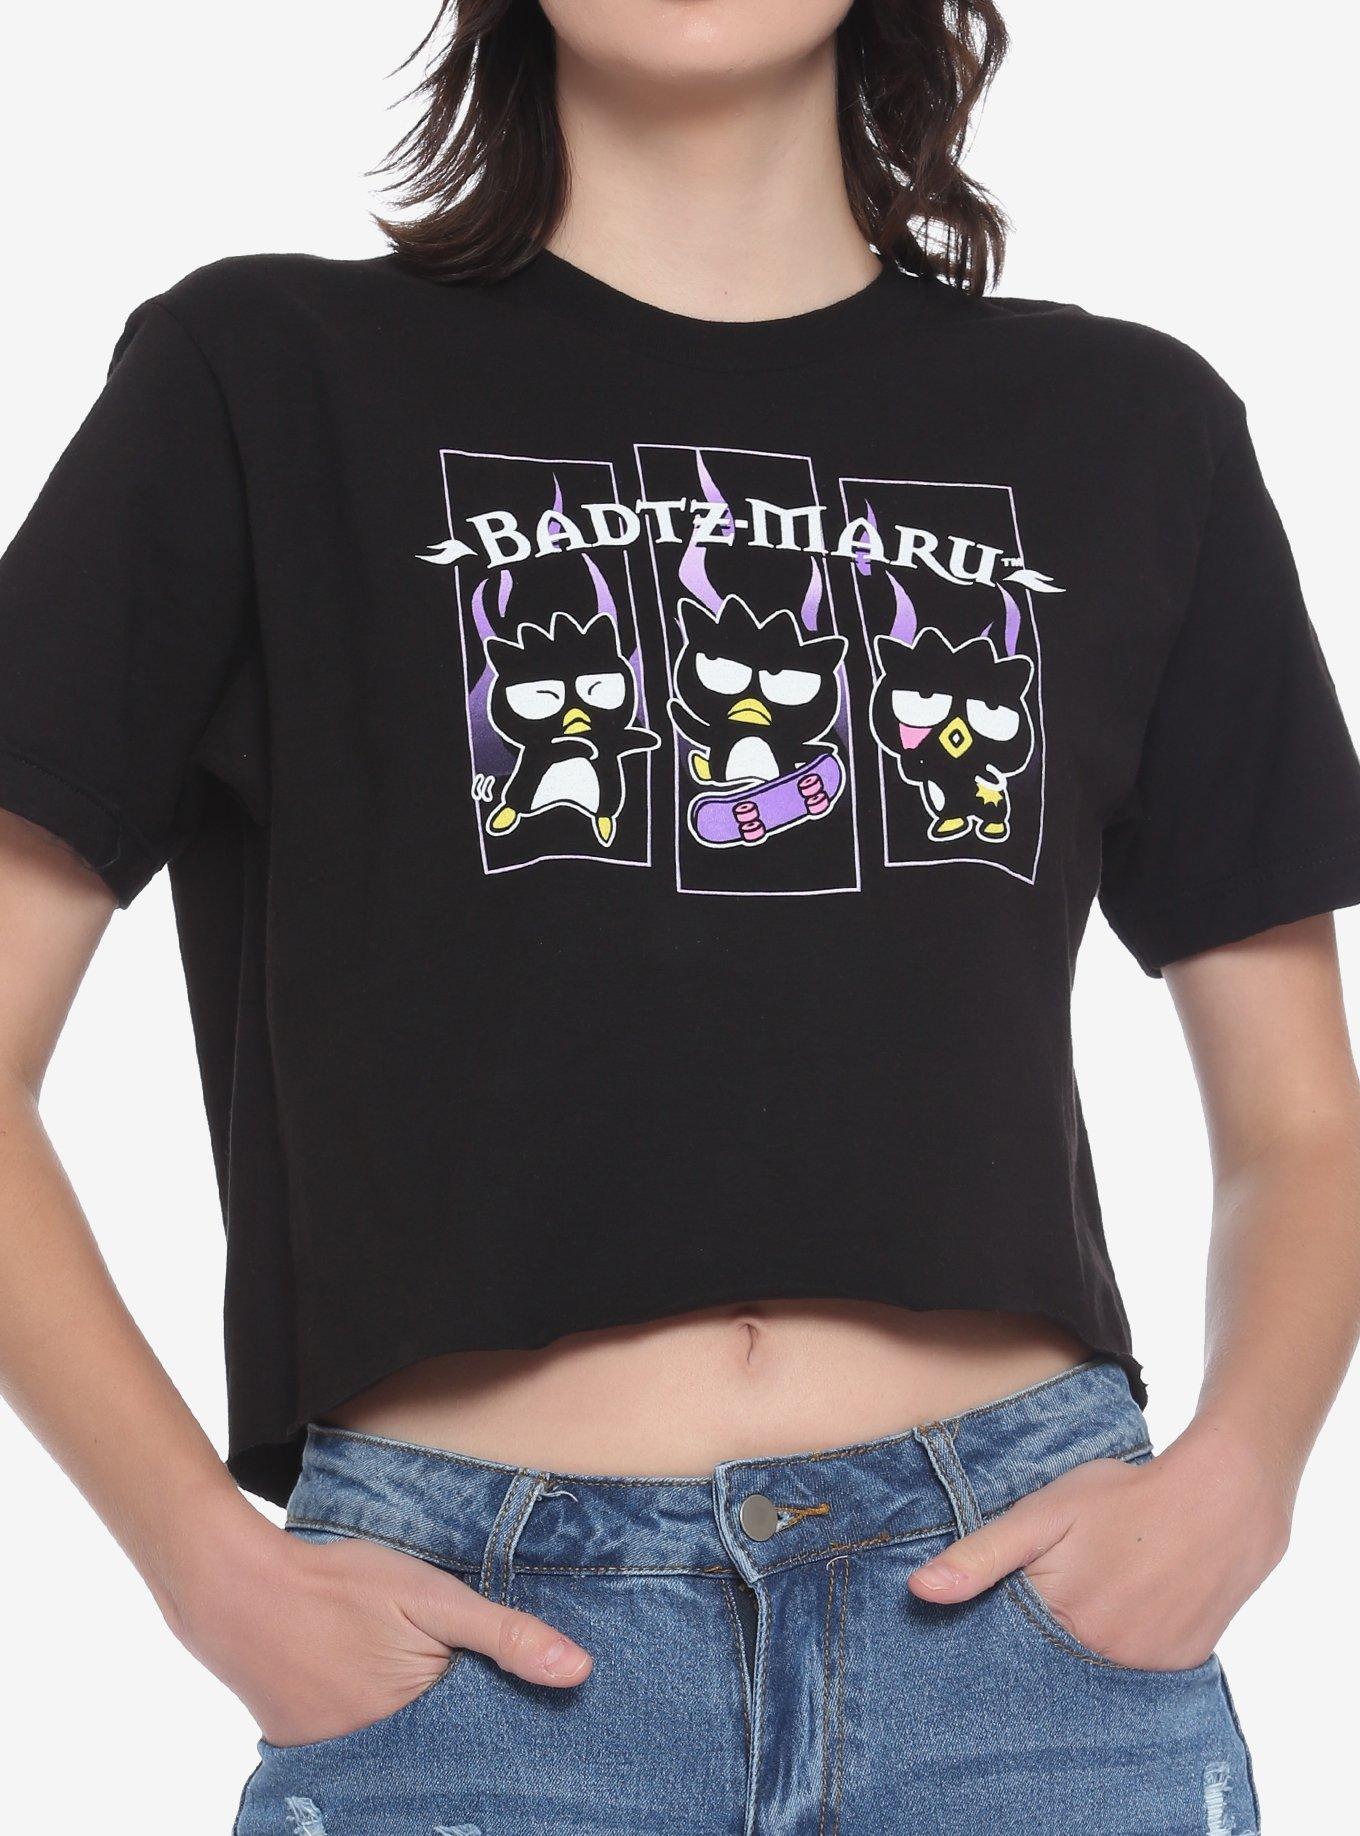 Badtz-Maru Flame Girls Crop T-Shirt, MULTI, hi-res